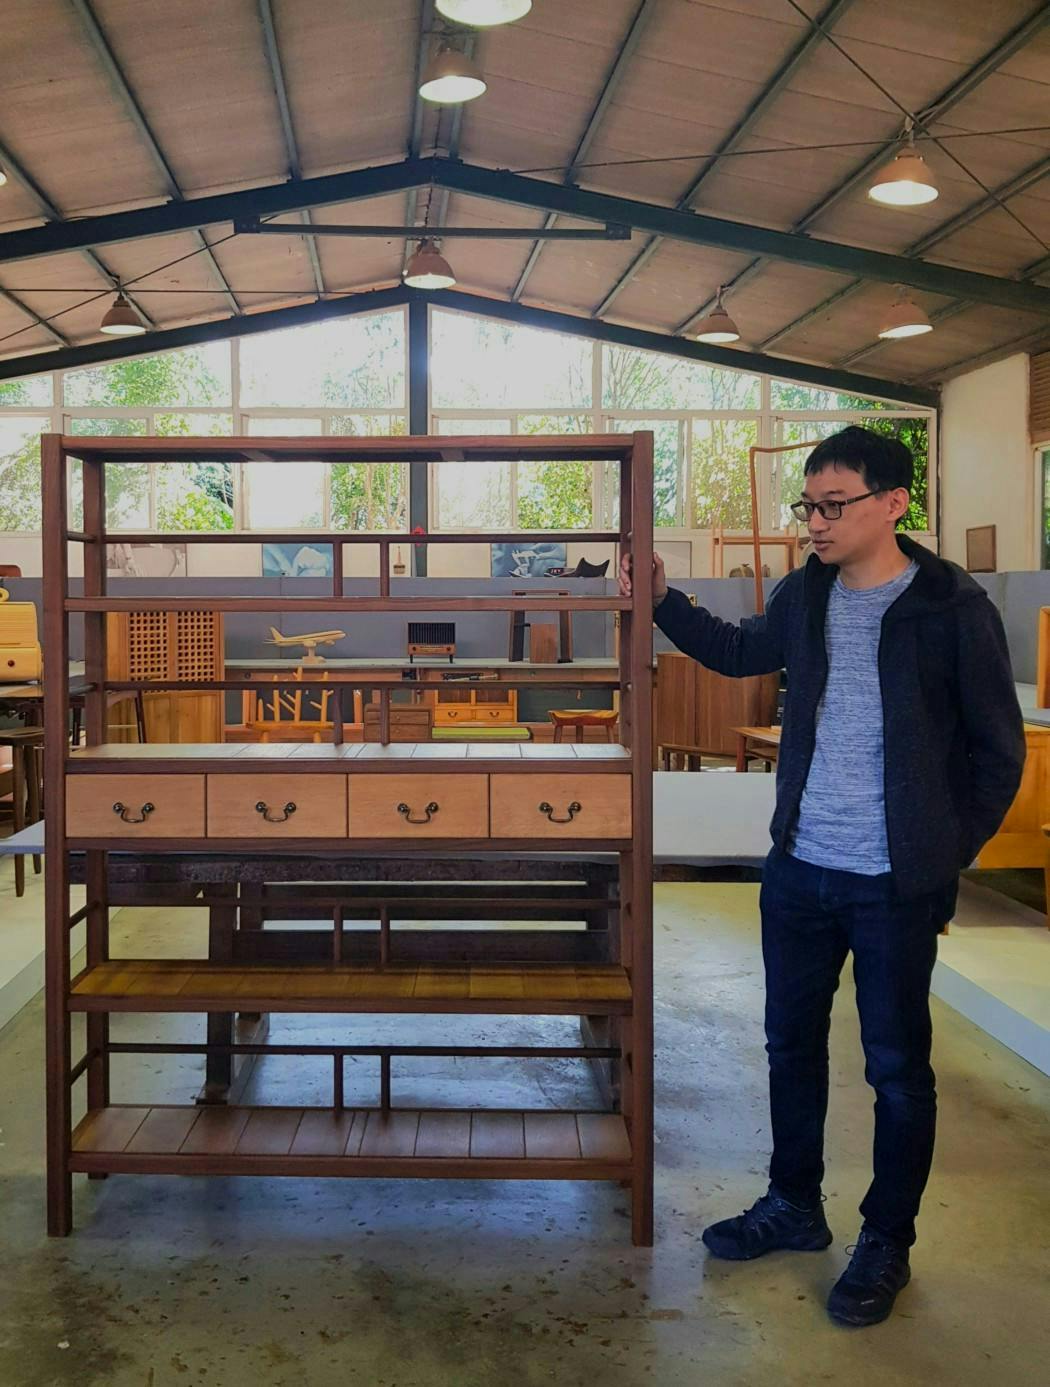 Zhou and his handmade bookshelf. Zhou is a woodworking hobbyist and software developer.